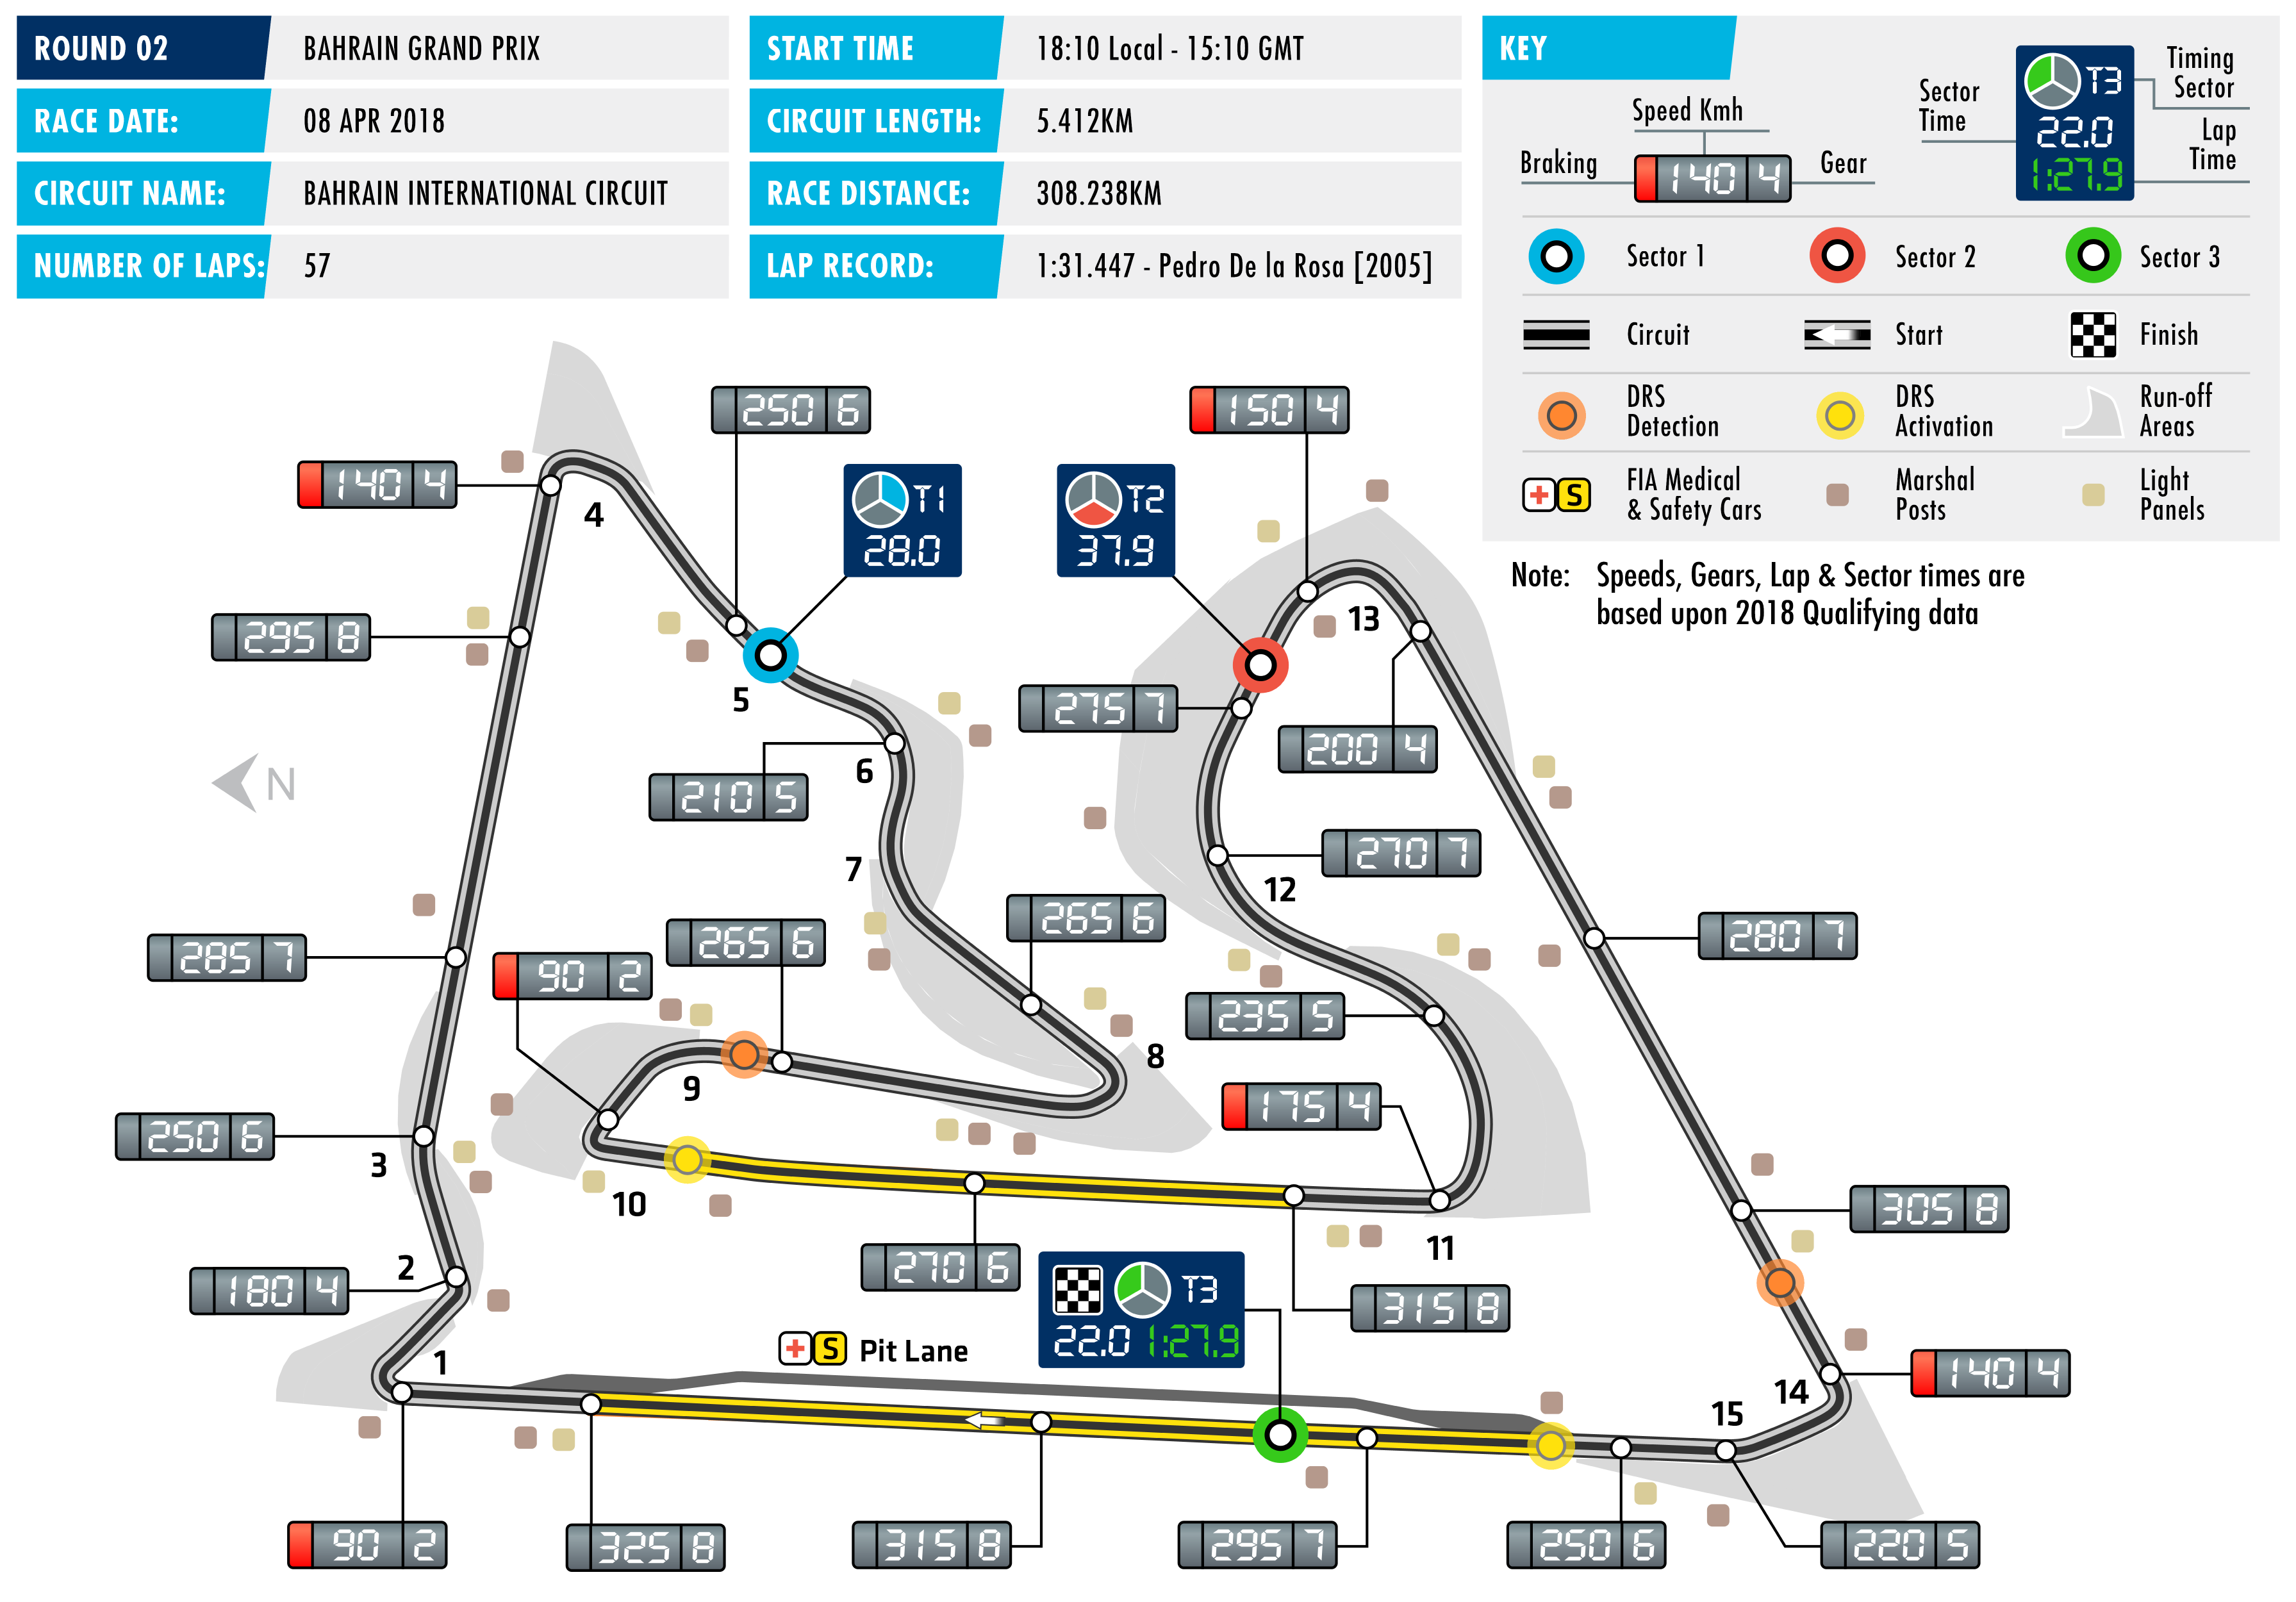 2018 Bahrain Grand Prix - Circuit Map